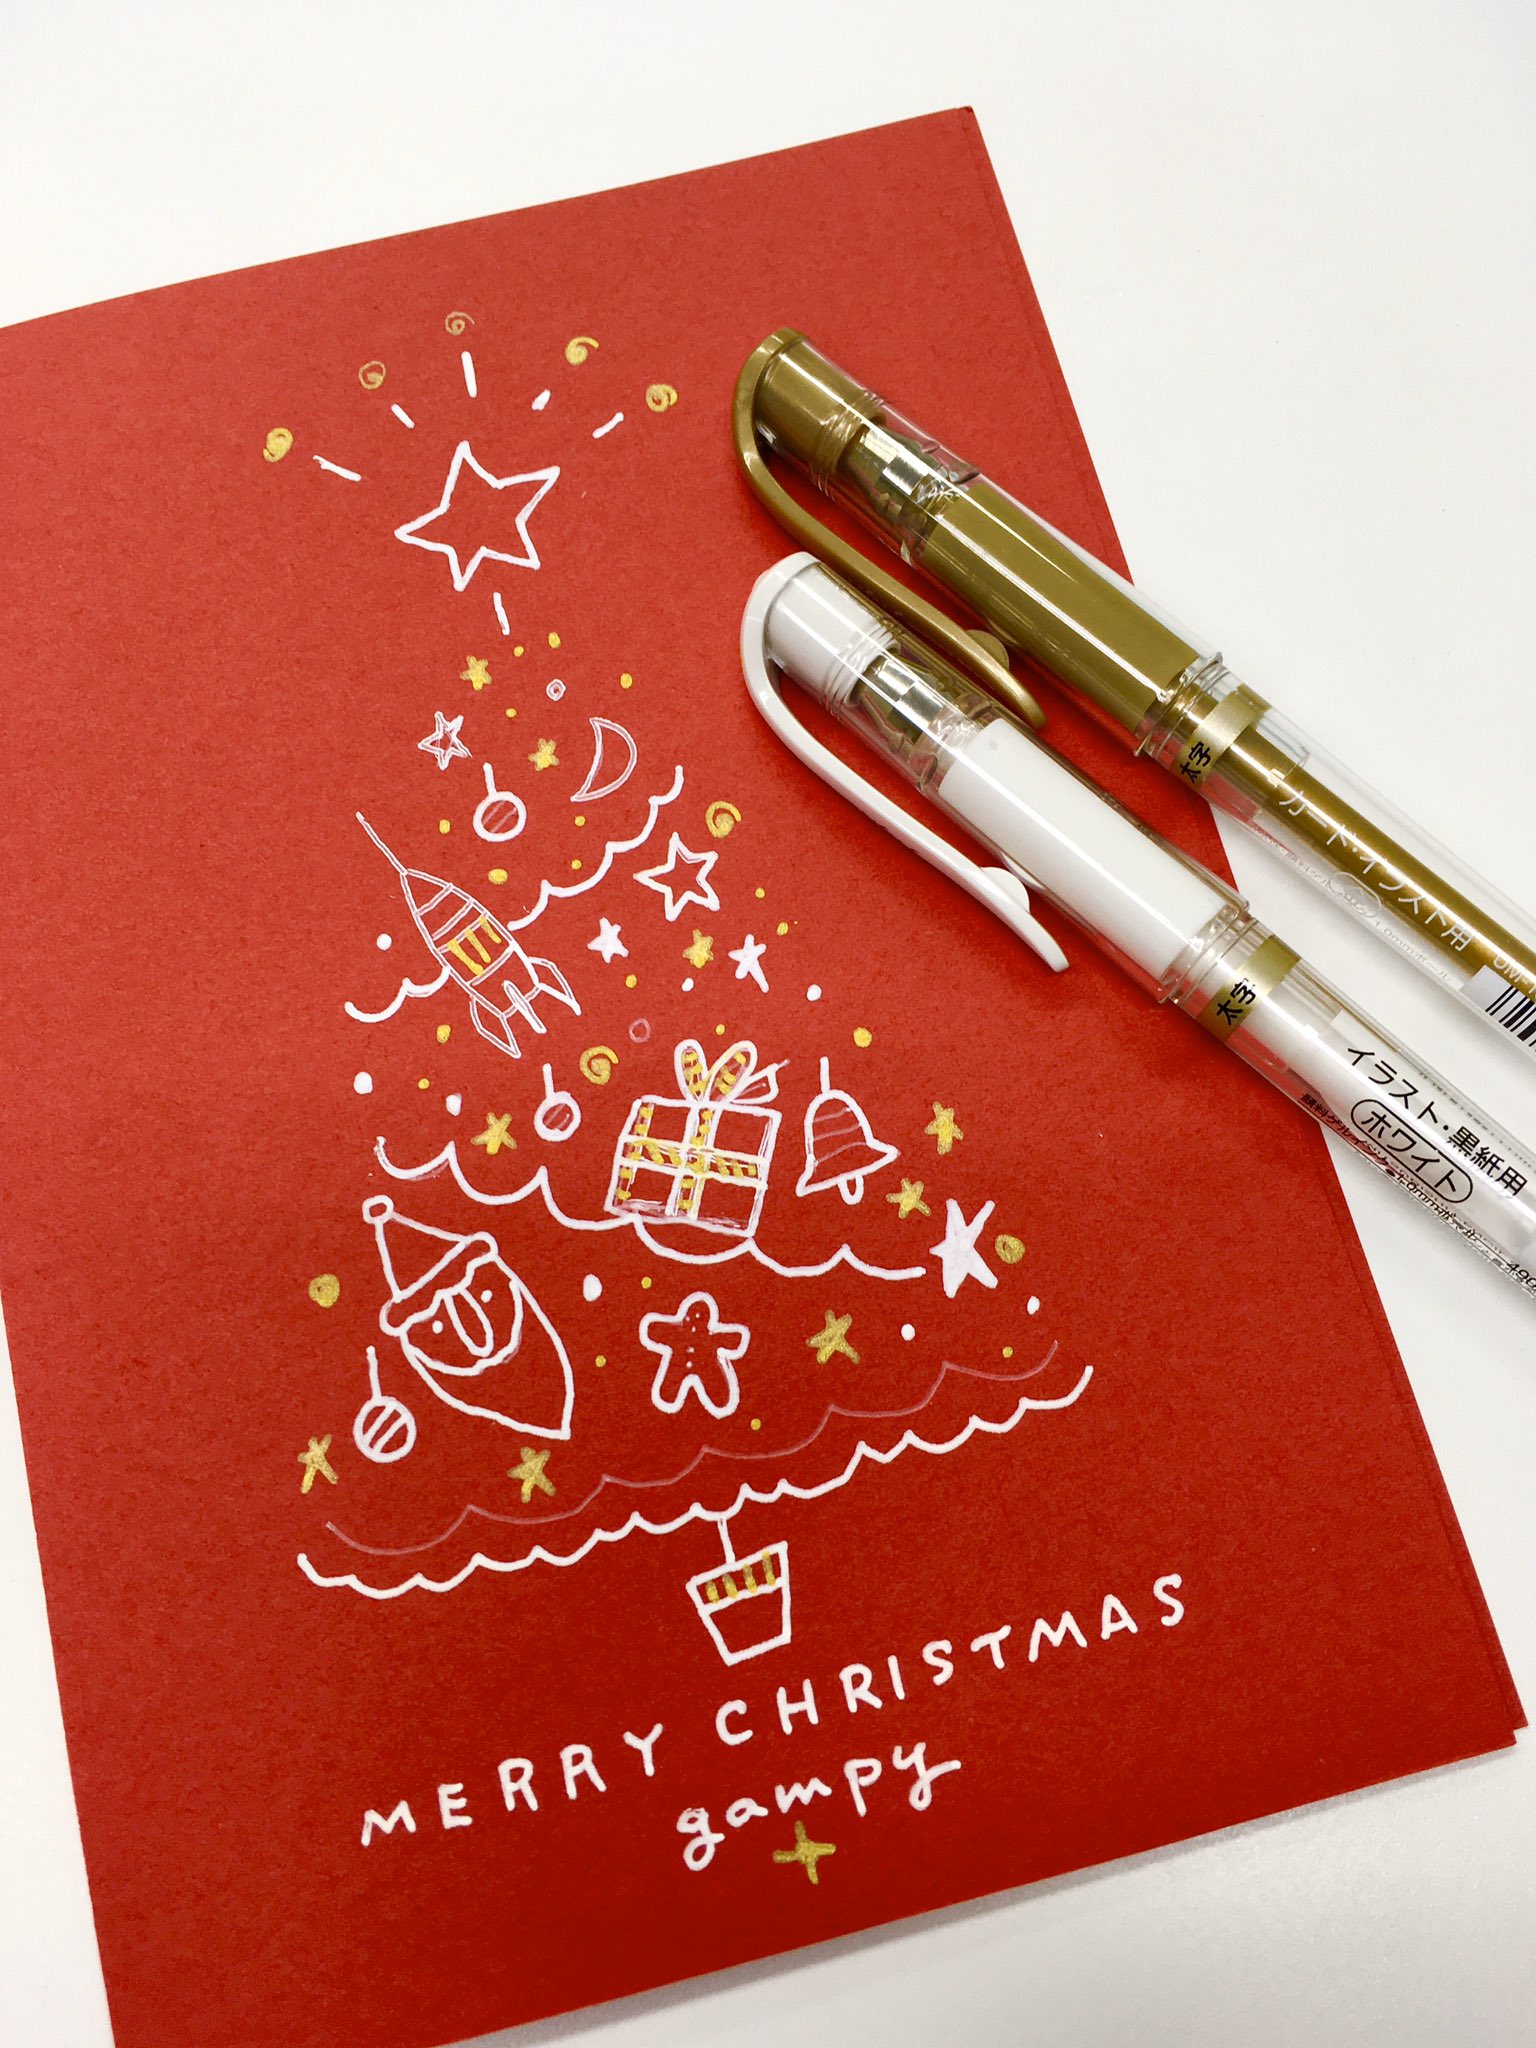 Yuko Ganpuku これも今夜のデモンストレーション 赤い画用紙に 白と金のボールペンで 手軽に楽しめます 大阪習い事 クリスマスカード T Co Tlap9ugph3 Twitter